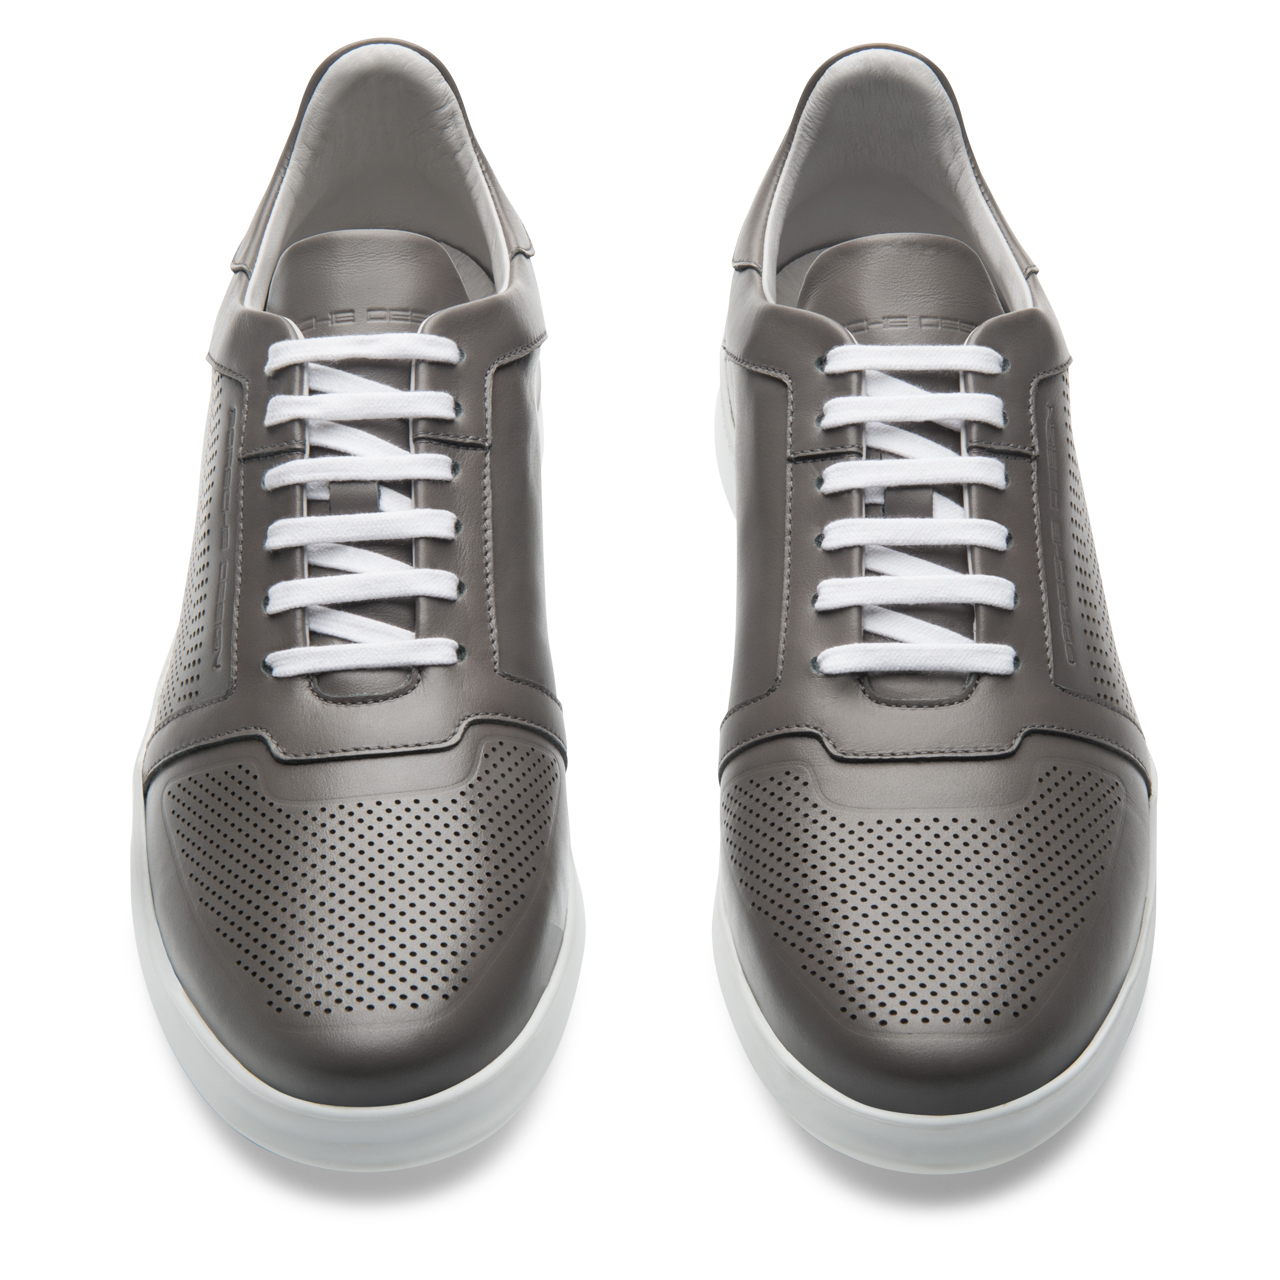 XL Extralight Panamera Exclusive Sneaker - Luxury Designer Shoes ...